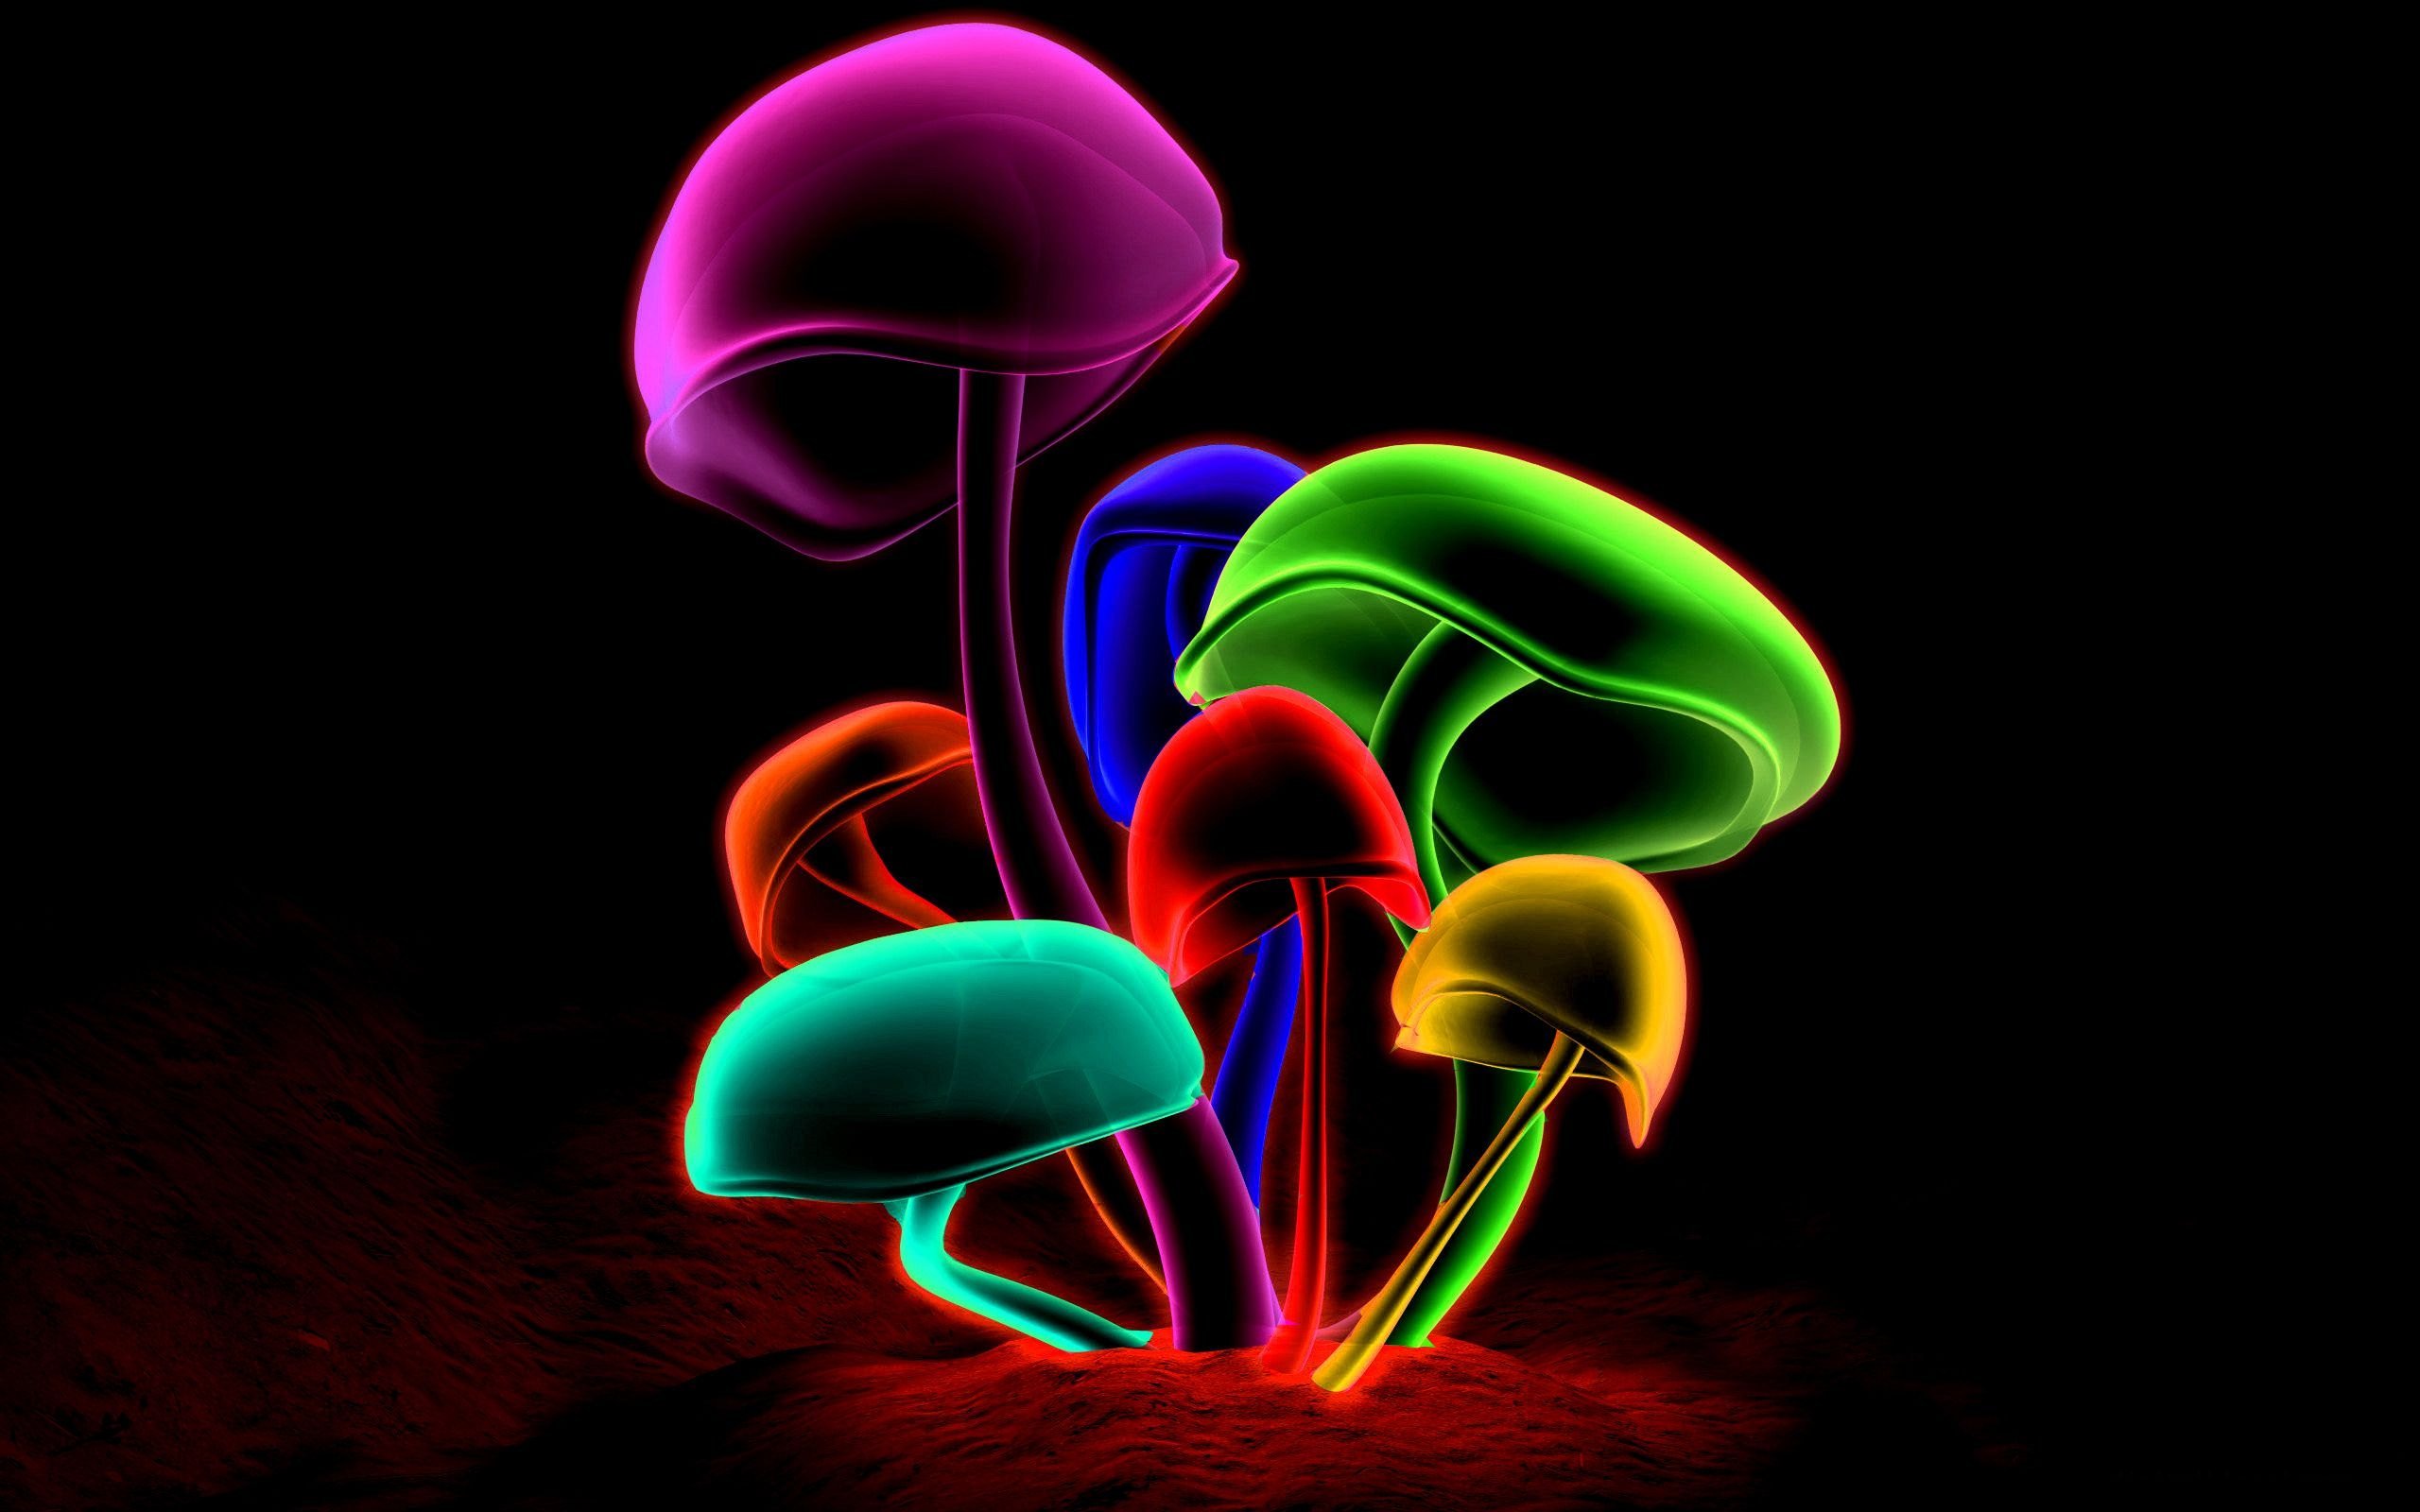 кислотные грибы картинки